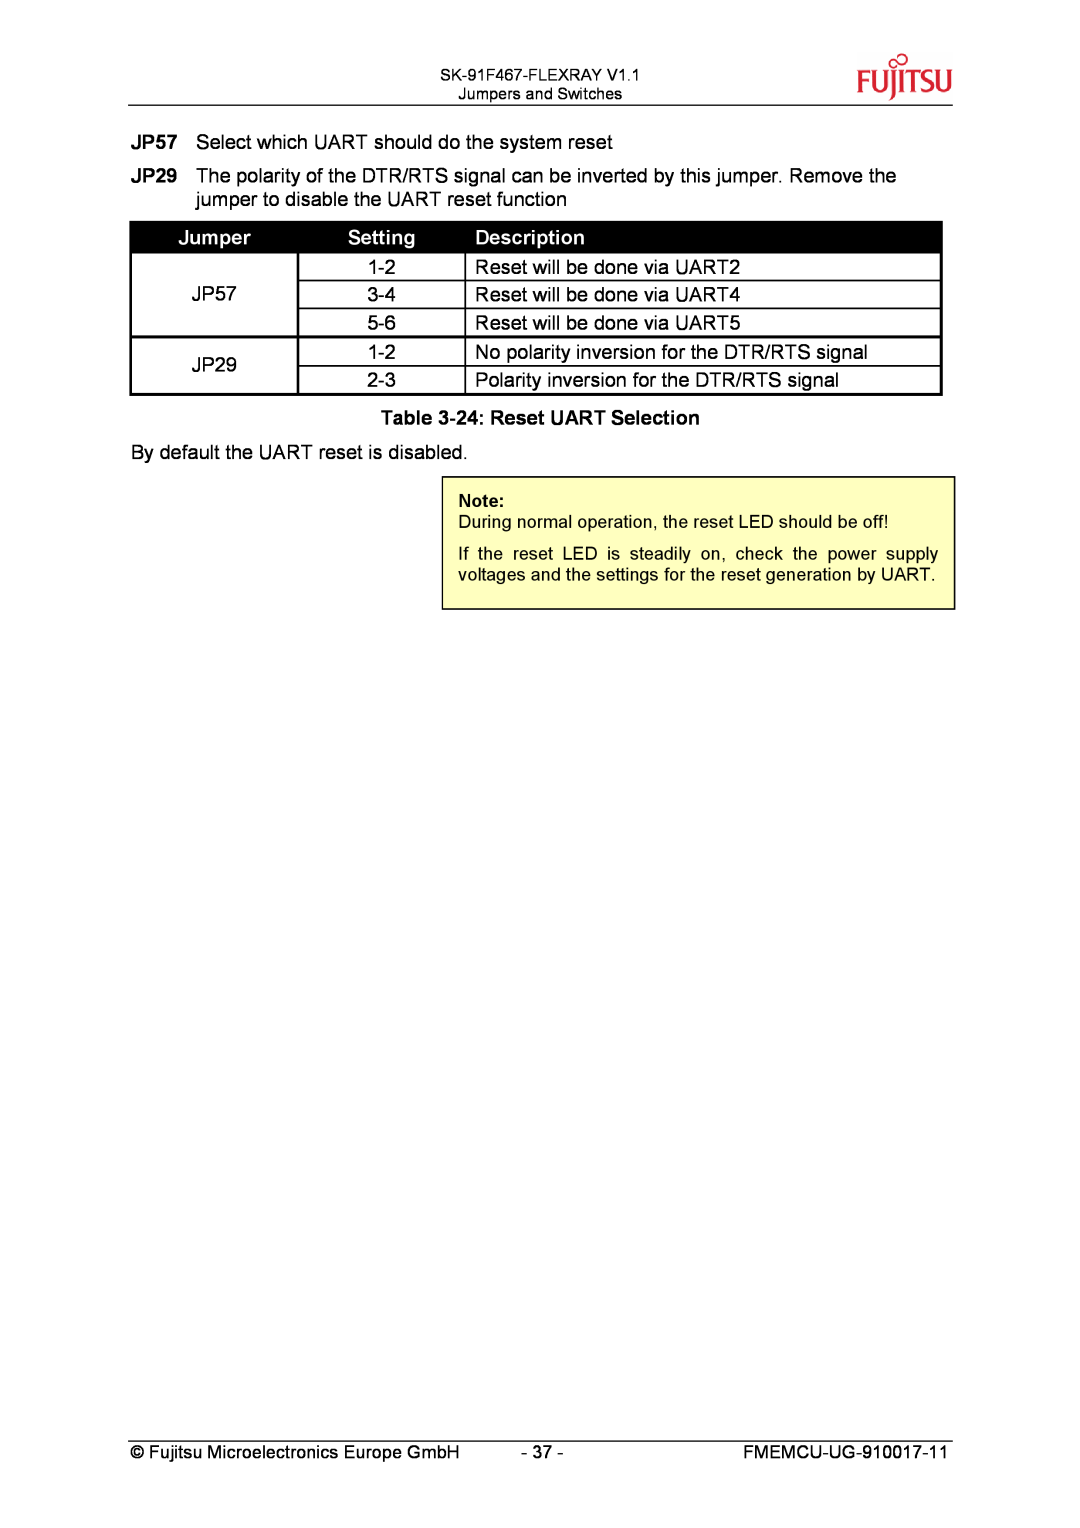 Fujitsu MB88121 SERIES, MB91460 SERIES manual 24 Reset UART Selection, Jumper, Setting, Description 